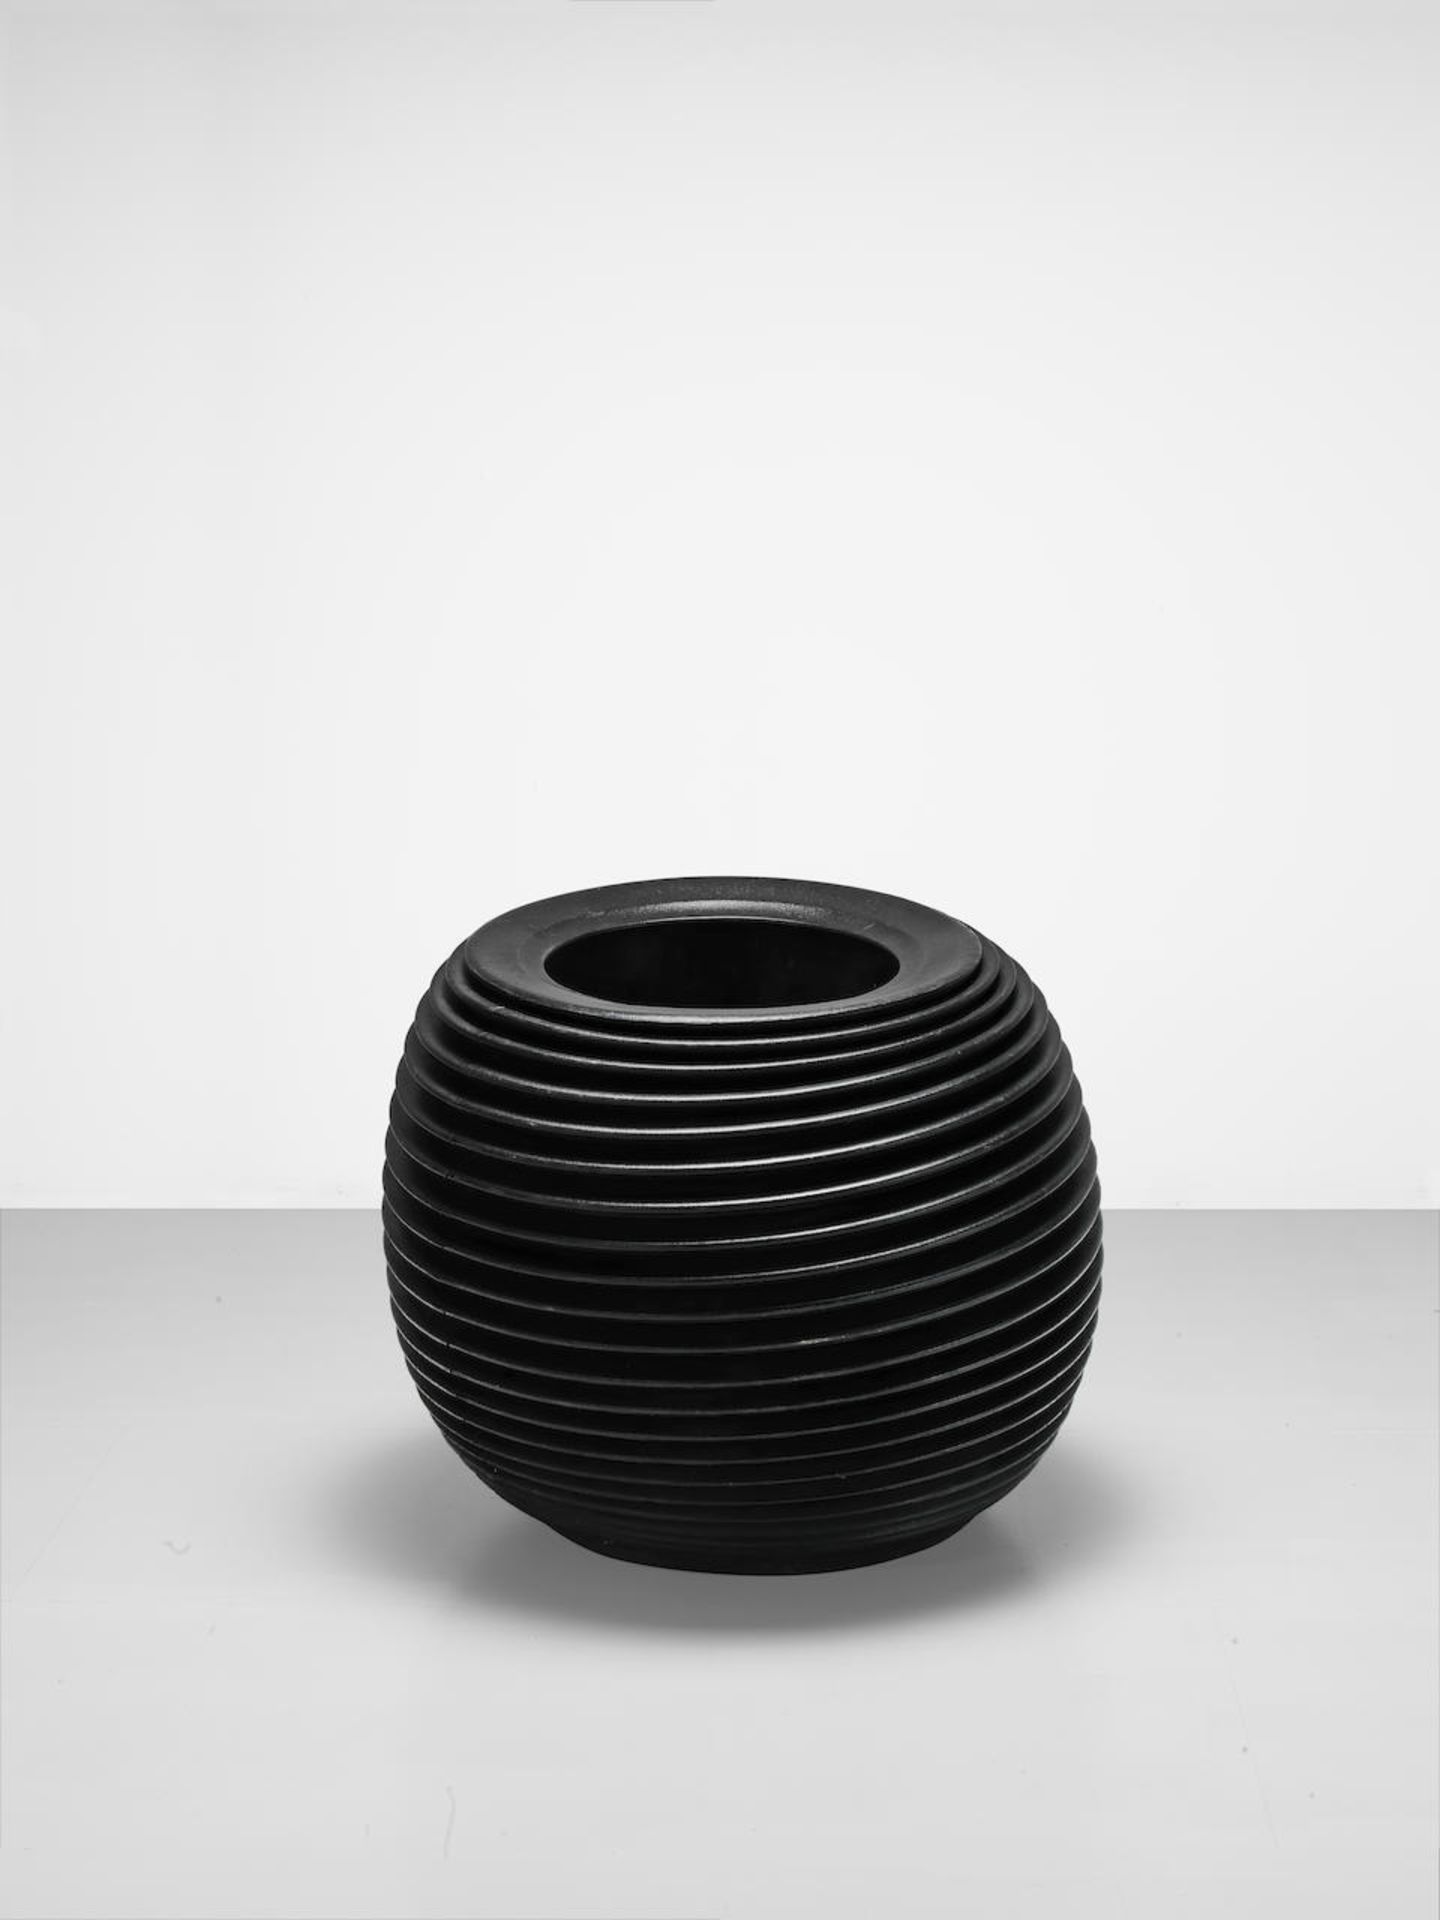 Ron Arad 'Top Pot' large planter, designed 2013